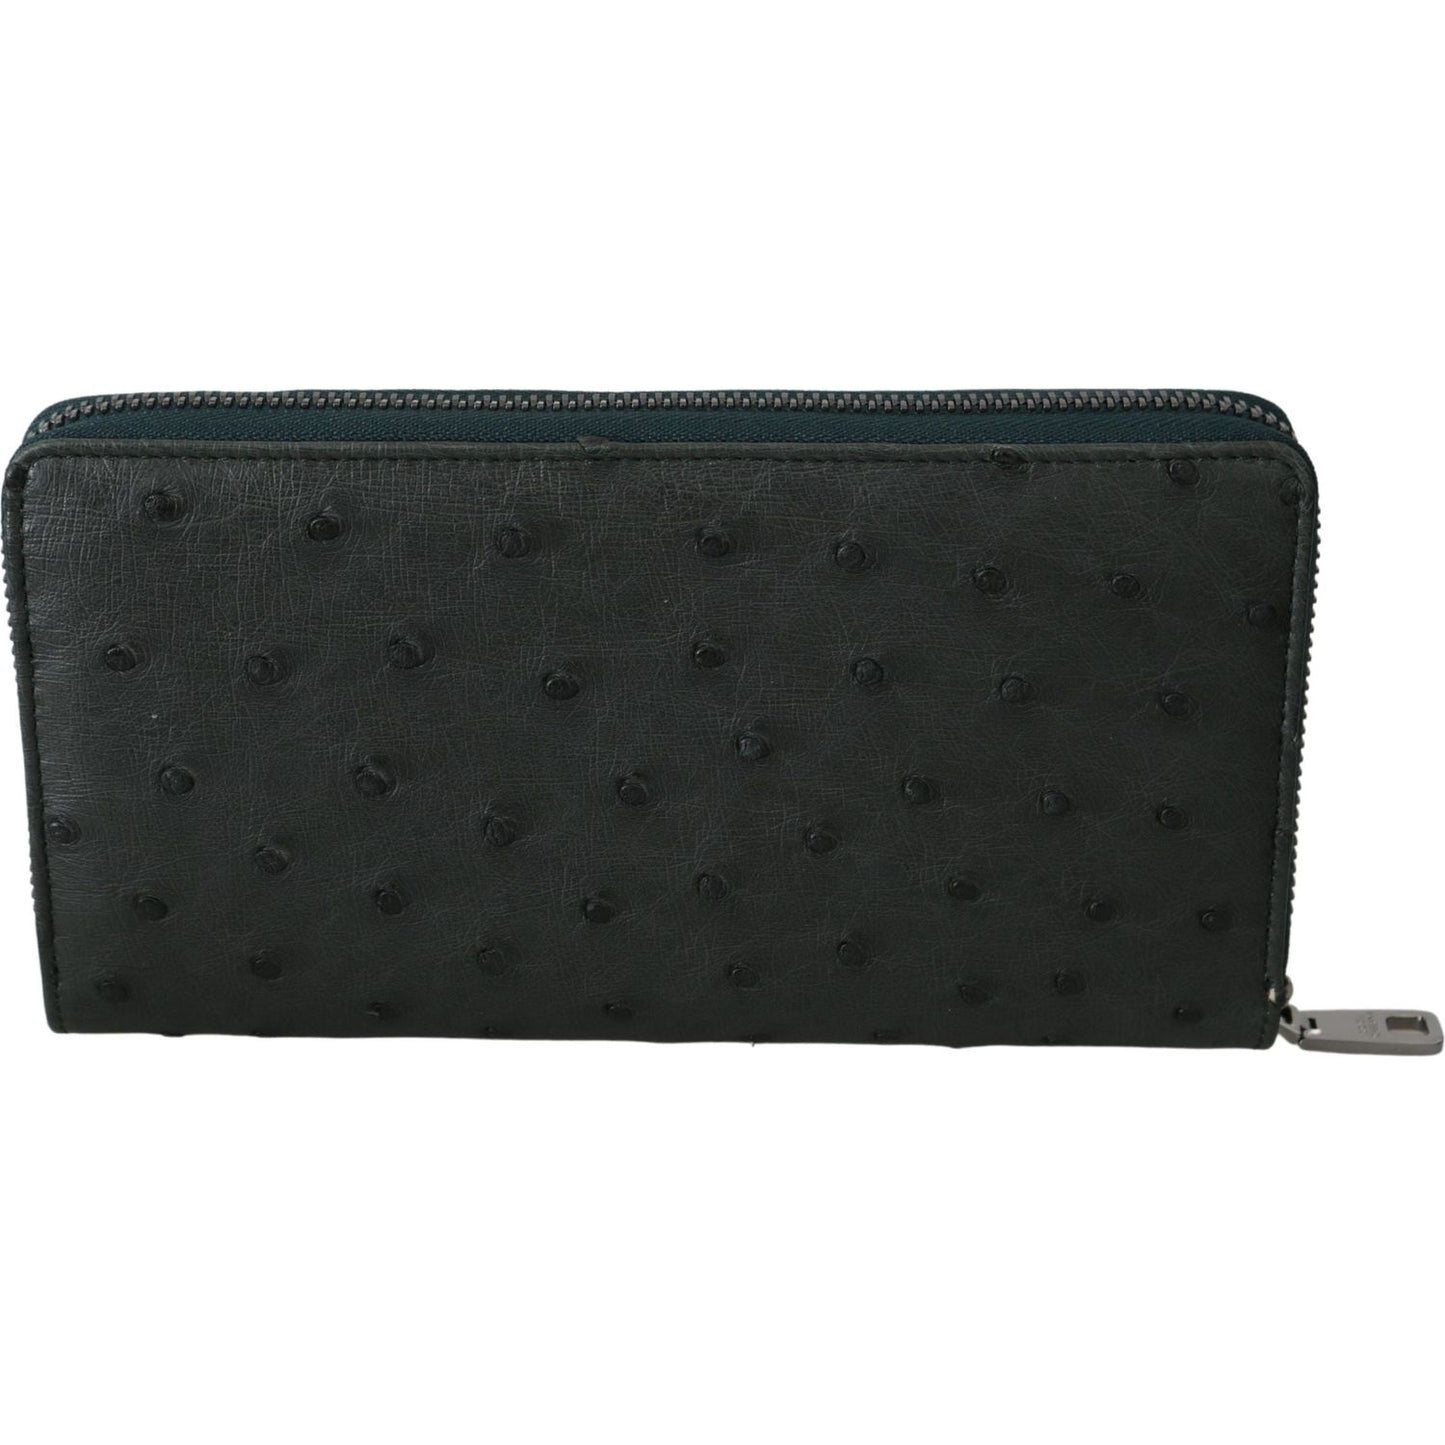 Dolce & Gabbana Exquisite Green Ostrich Leather Continental Wallet Wallet green-ostrich-leather-continental-mens-clutch-wallet